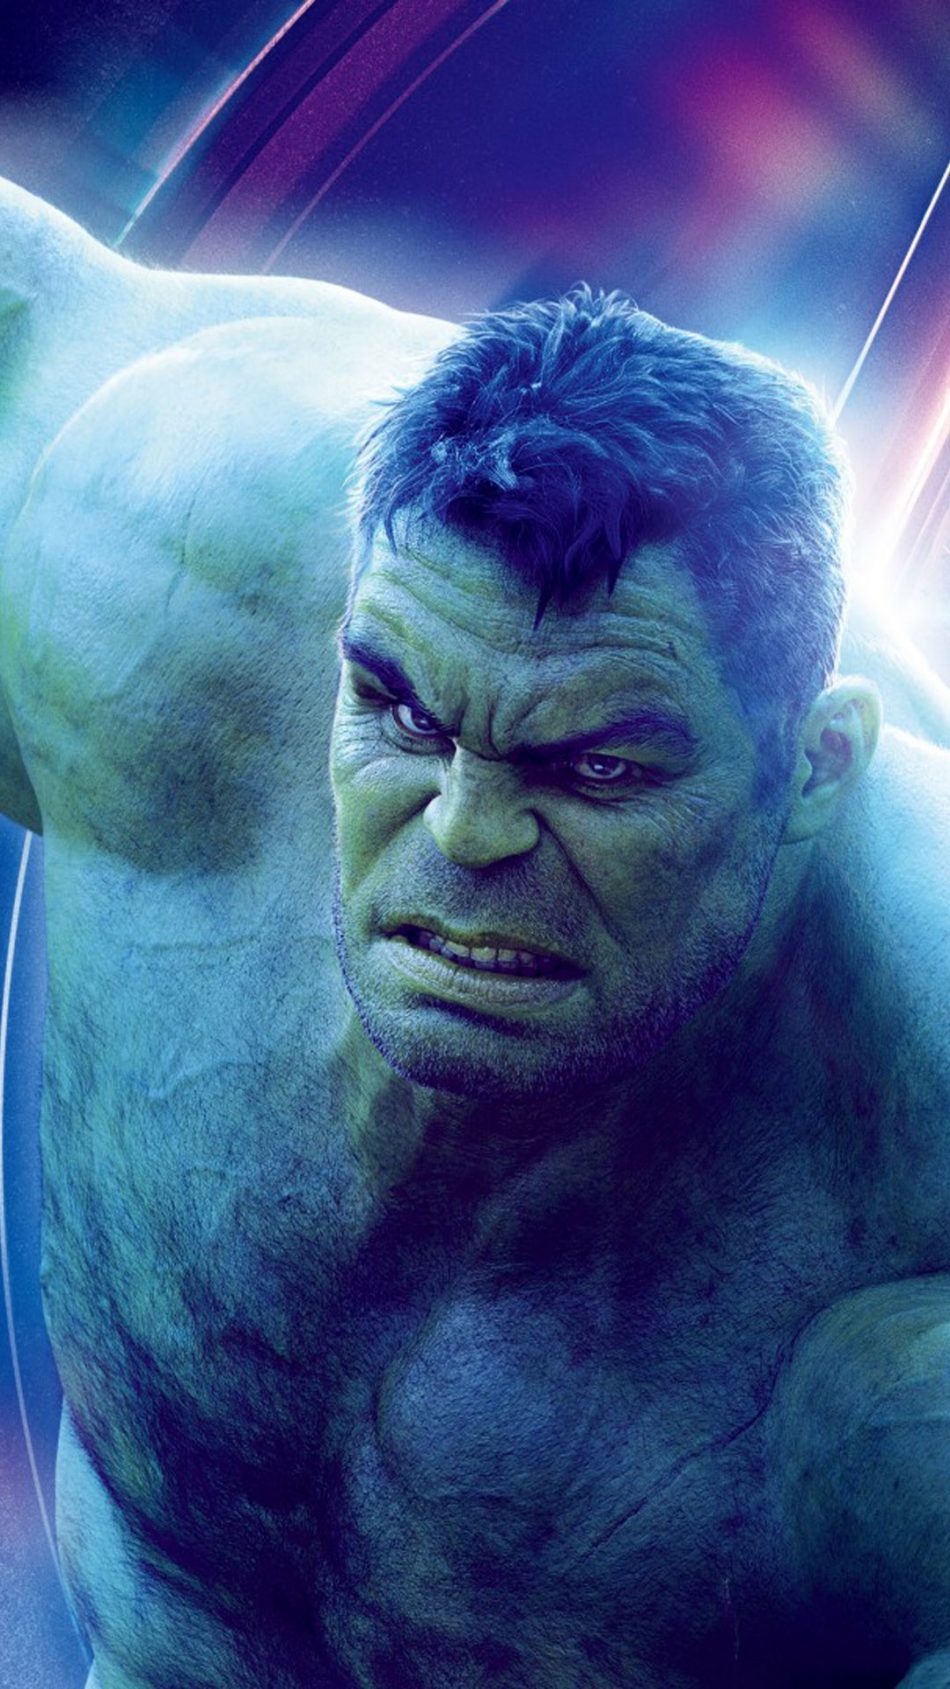 Hulk In Avengers Infinity War Pure 4k Ultra HD